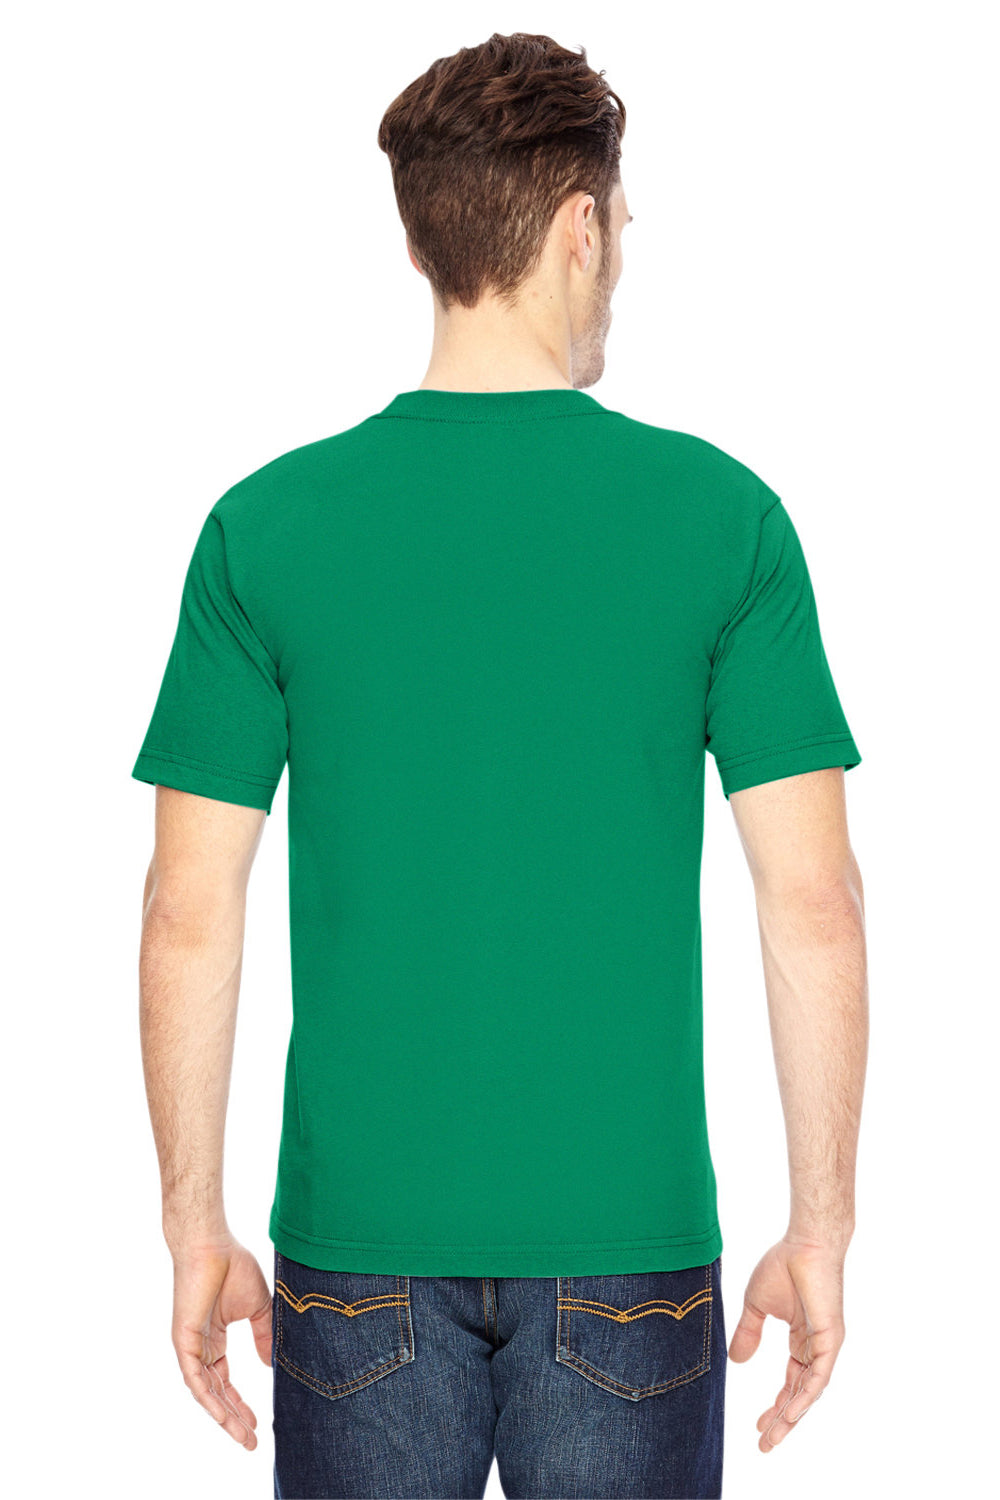 Bayside BA5100 Mens USA Made Short Sleeve Crewneck T-Shirt Kelly Green Model Back